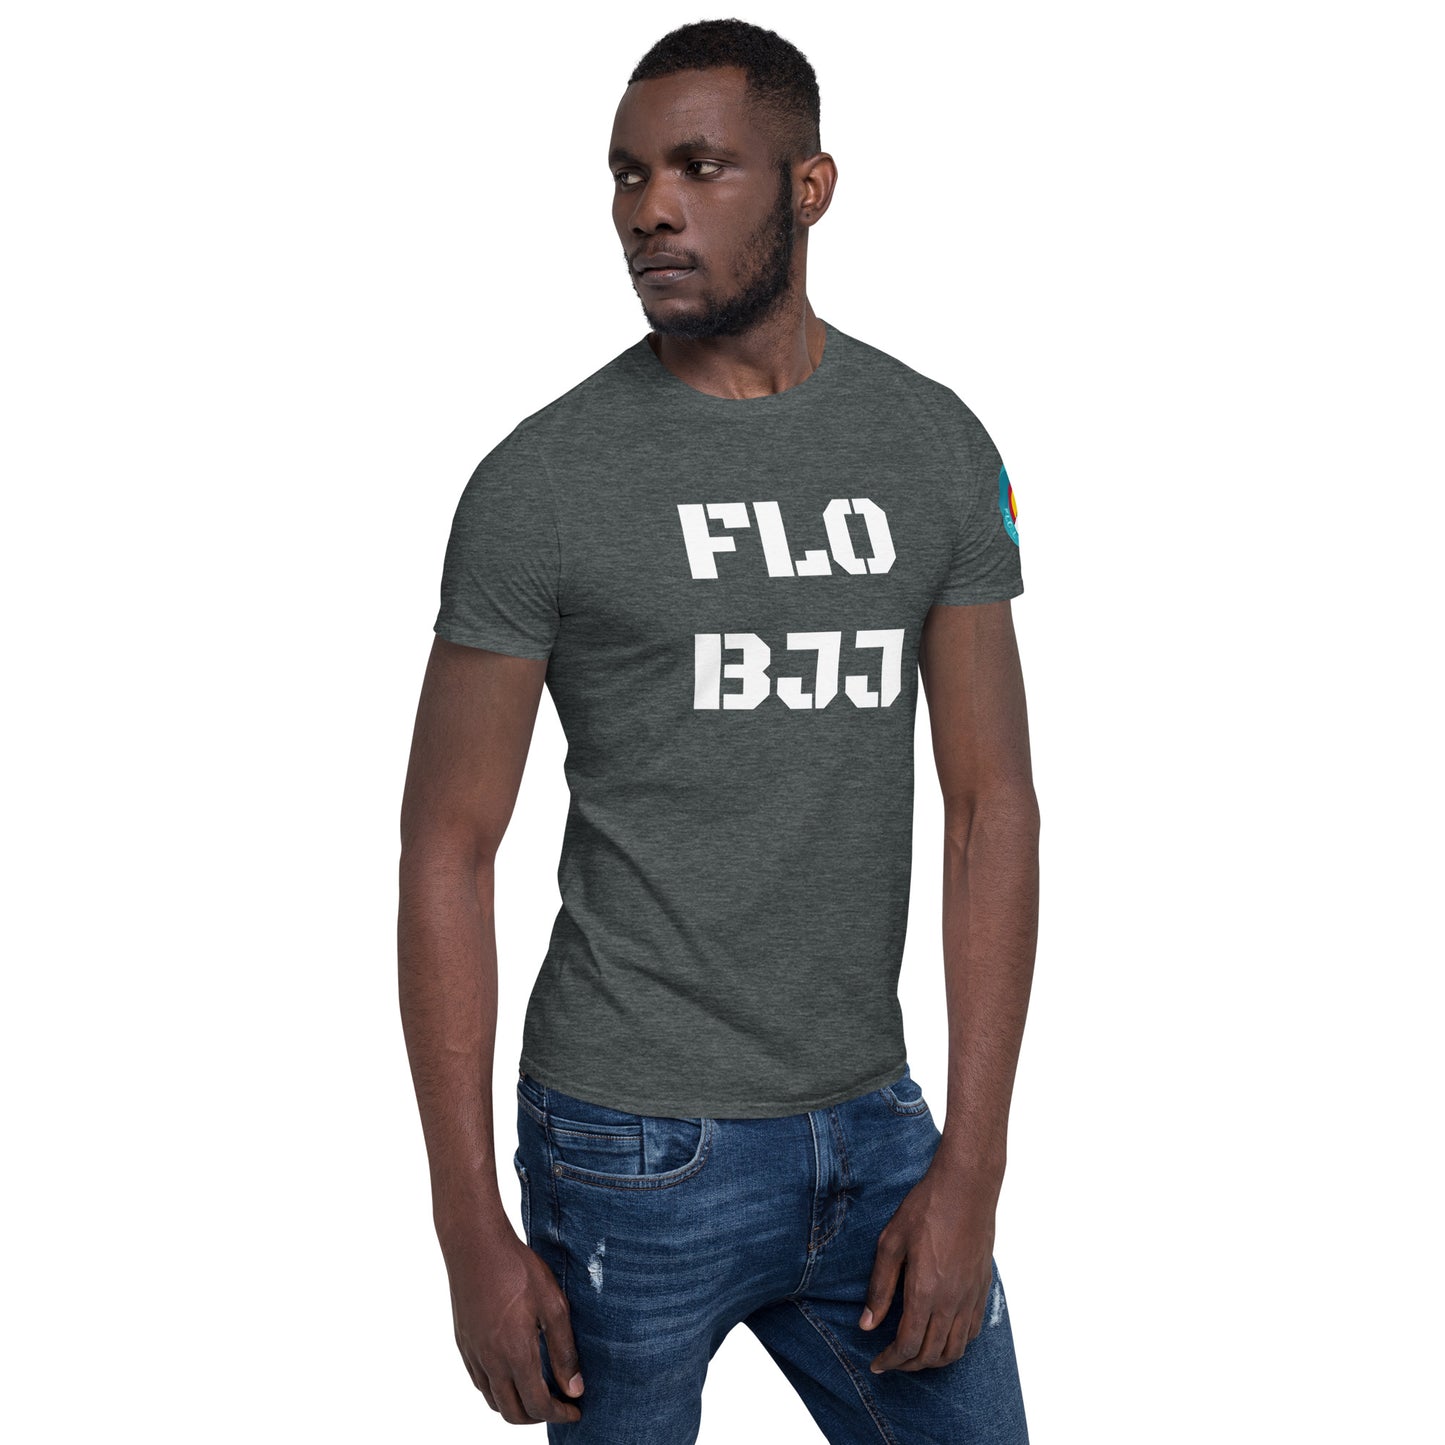 FLO BJJ T-Shirt